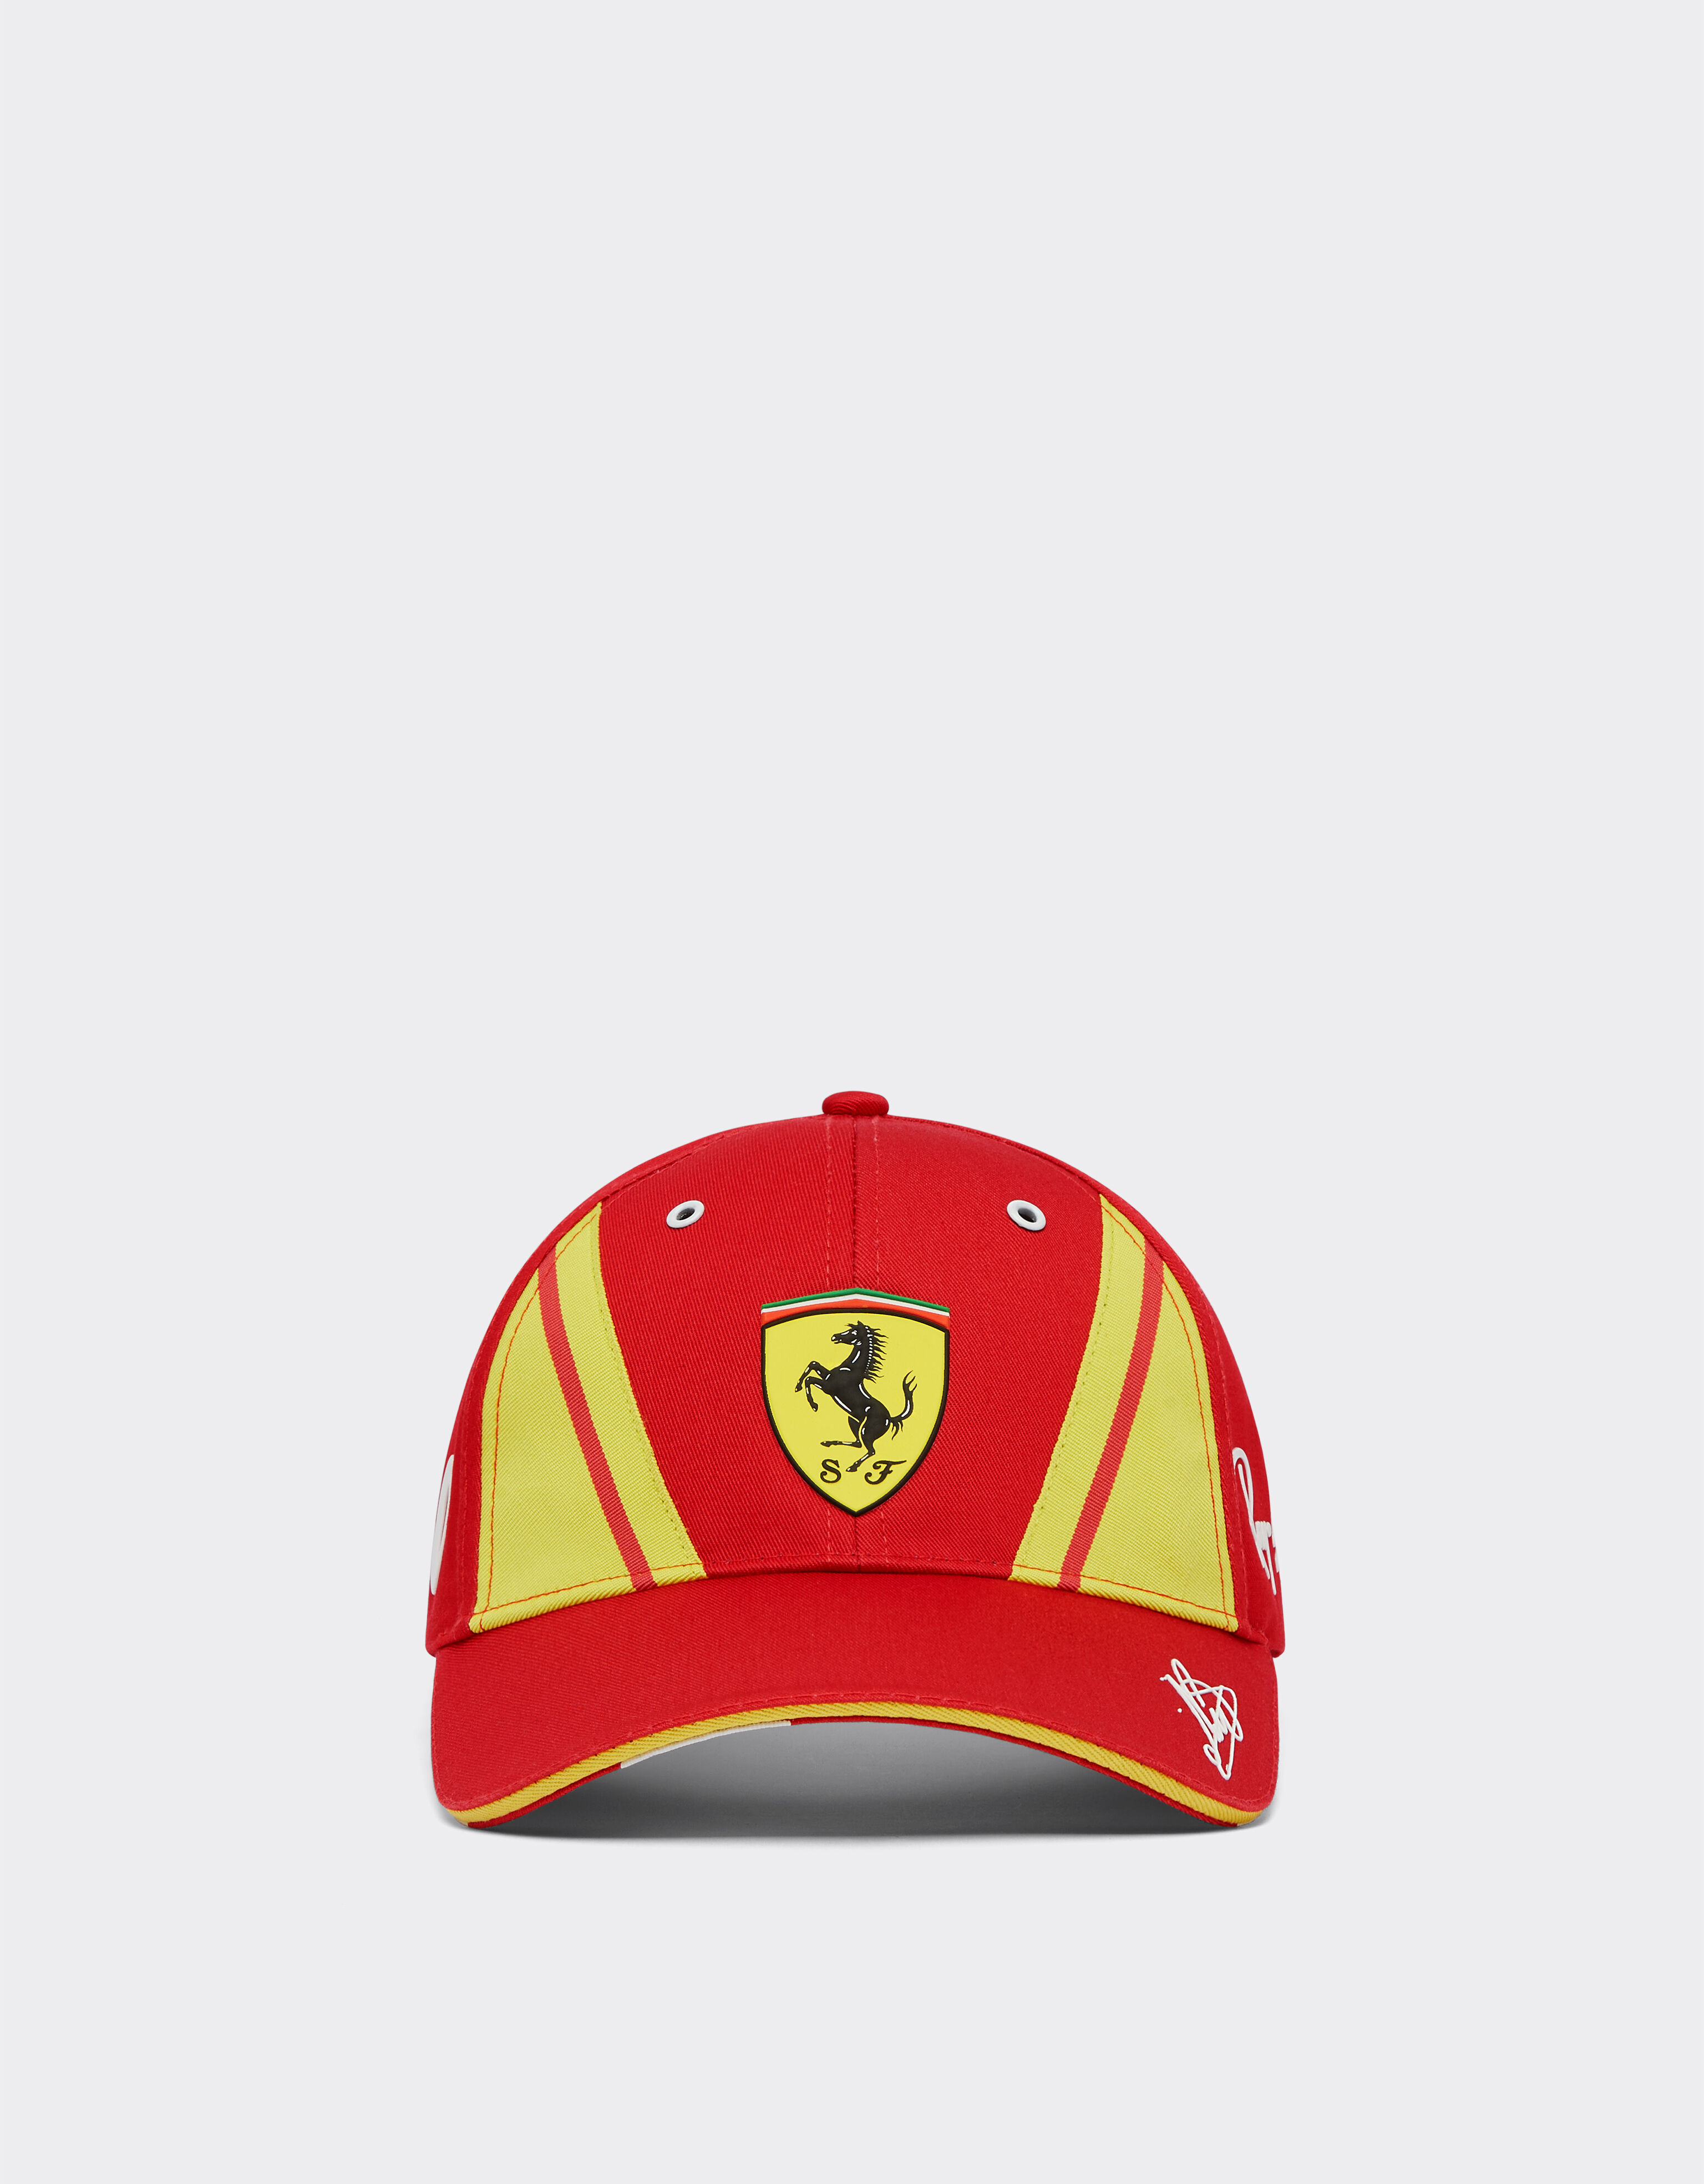 ${brand} Nielsen Ferrari Hypercar Baseballcap - Limited Edition ${colorDescription} ${masterID}